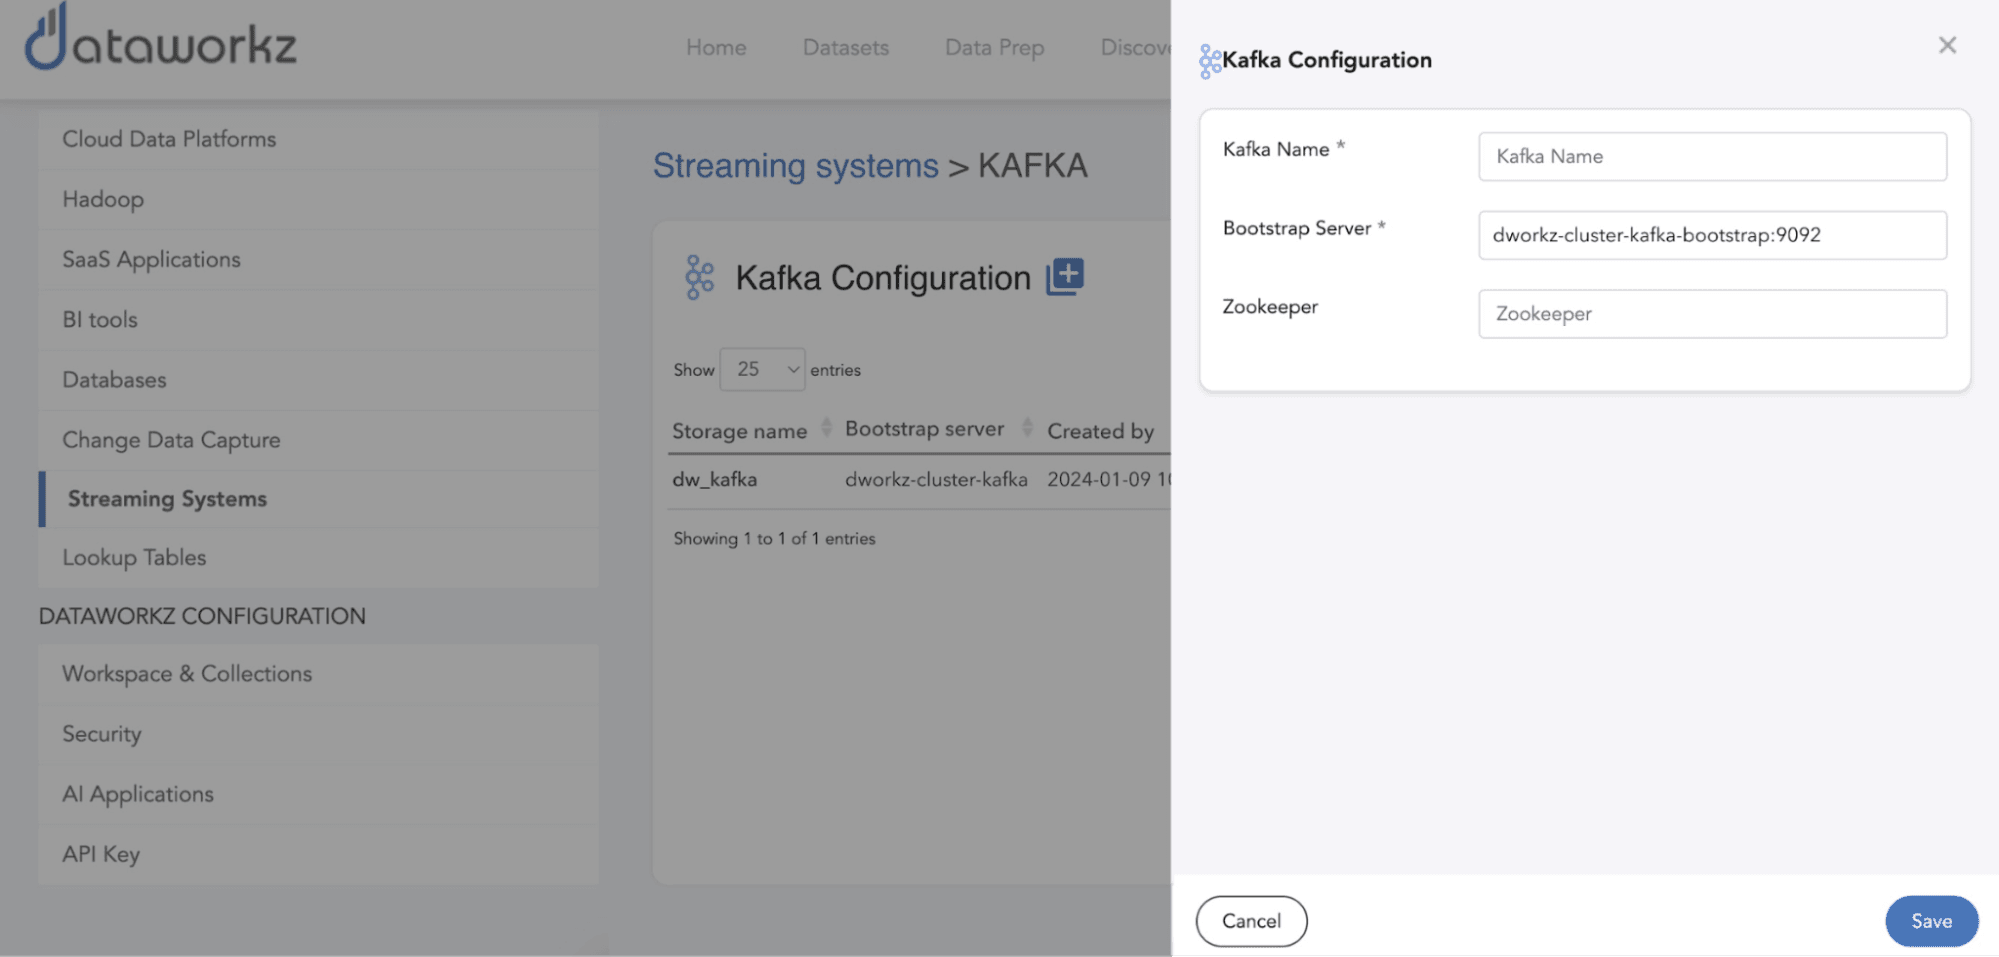 Kafka connection configuration details in Dataworkz